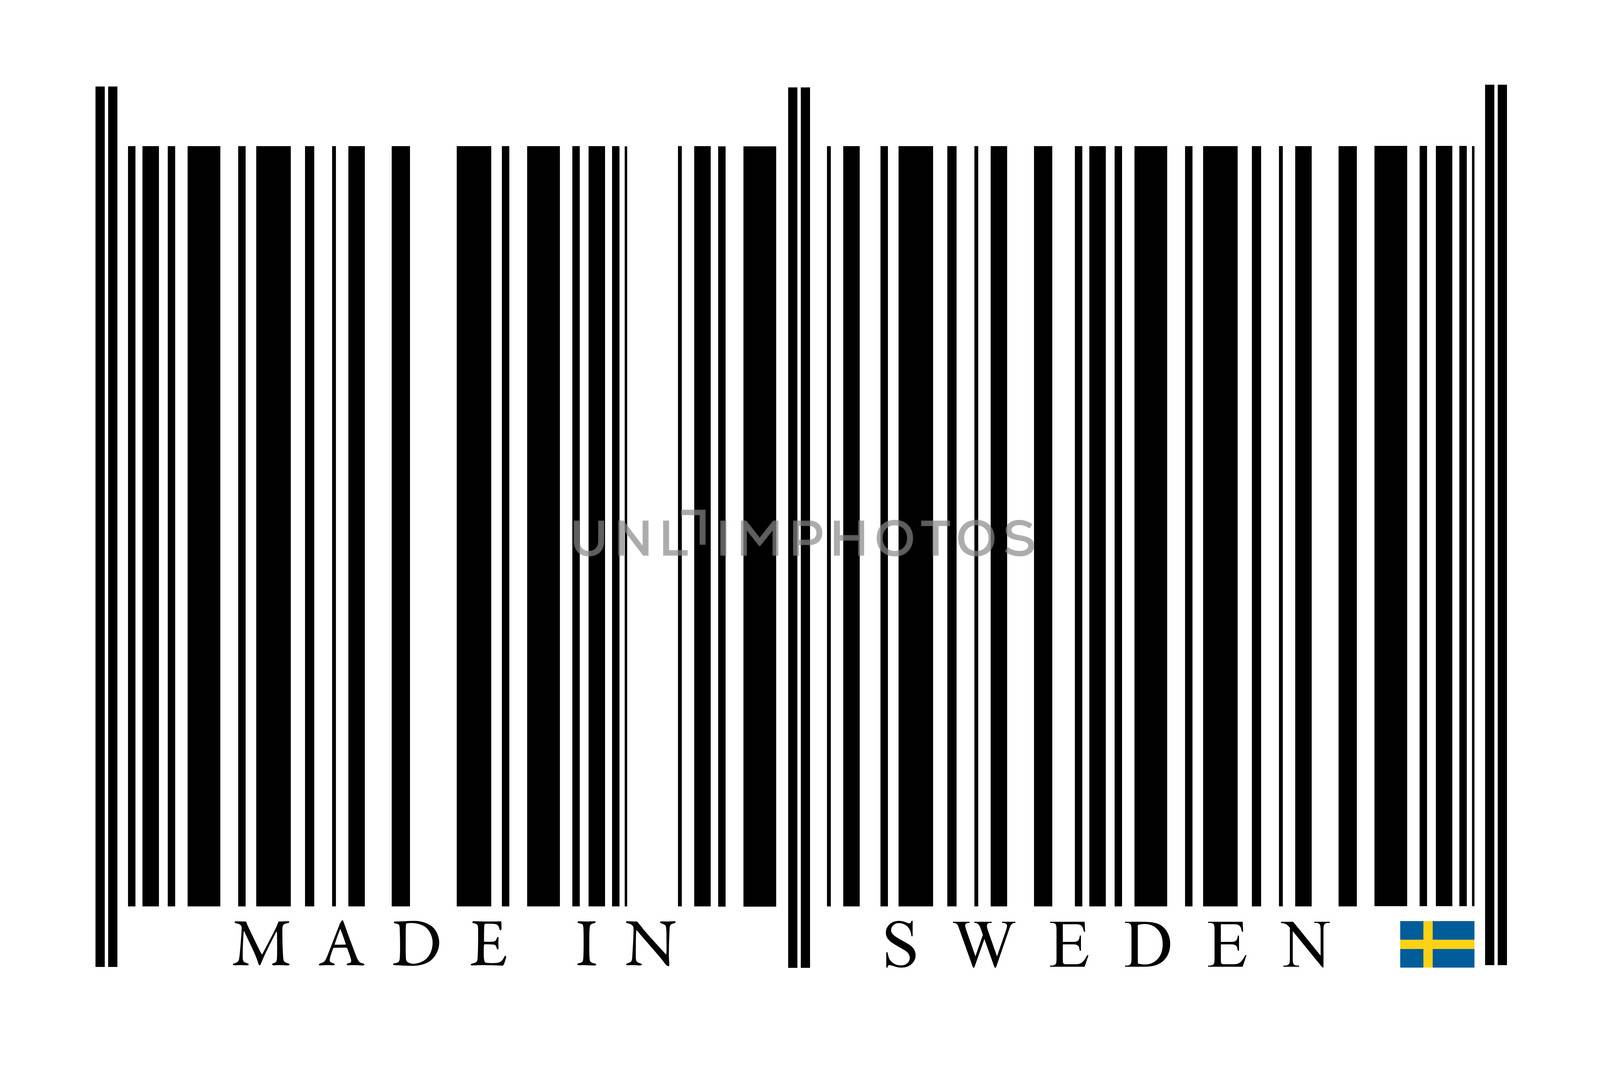 Sweden Barcode by gemenacom